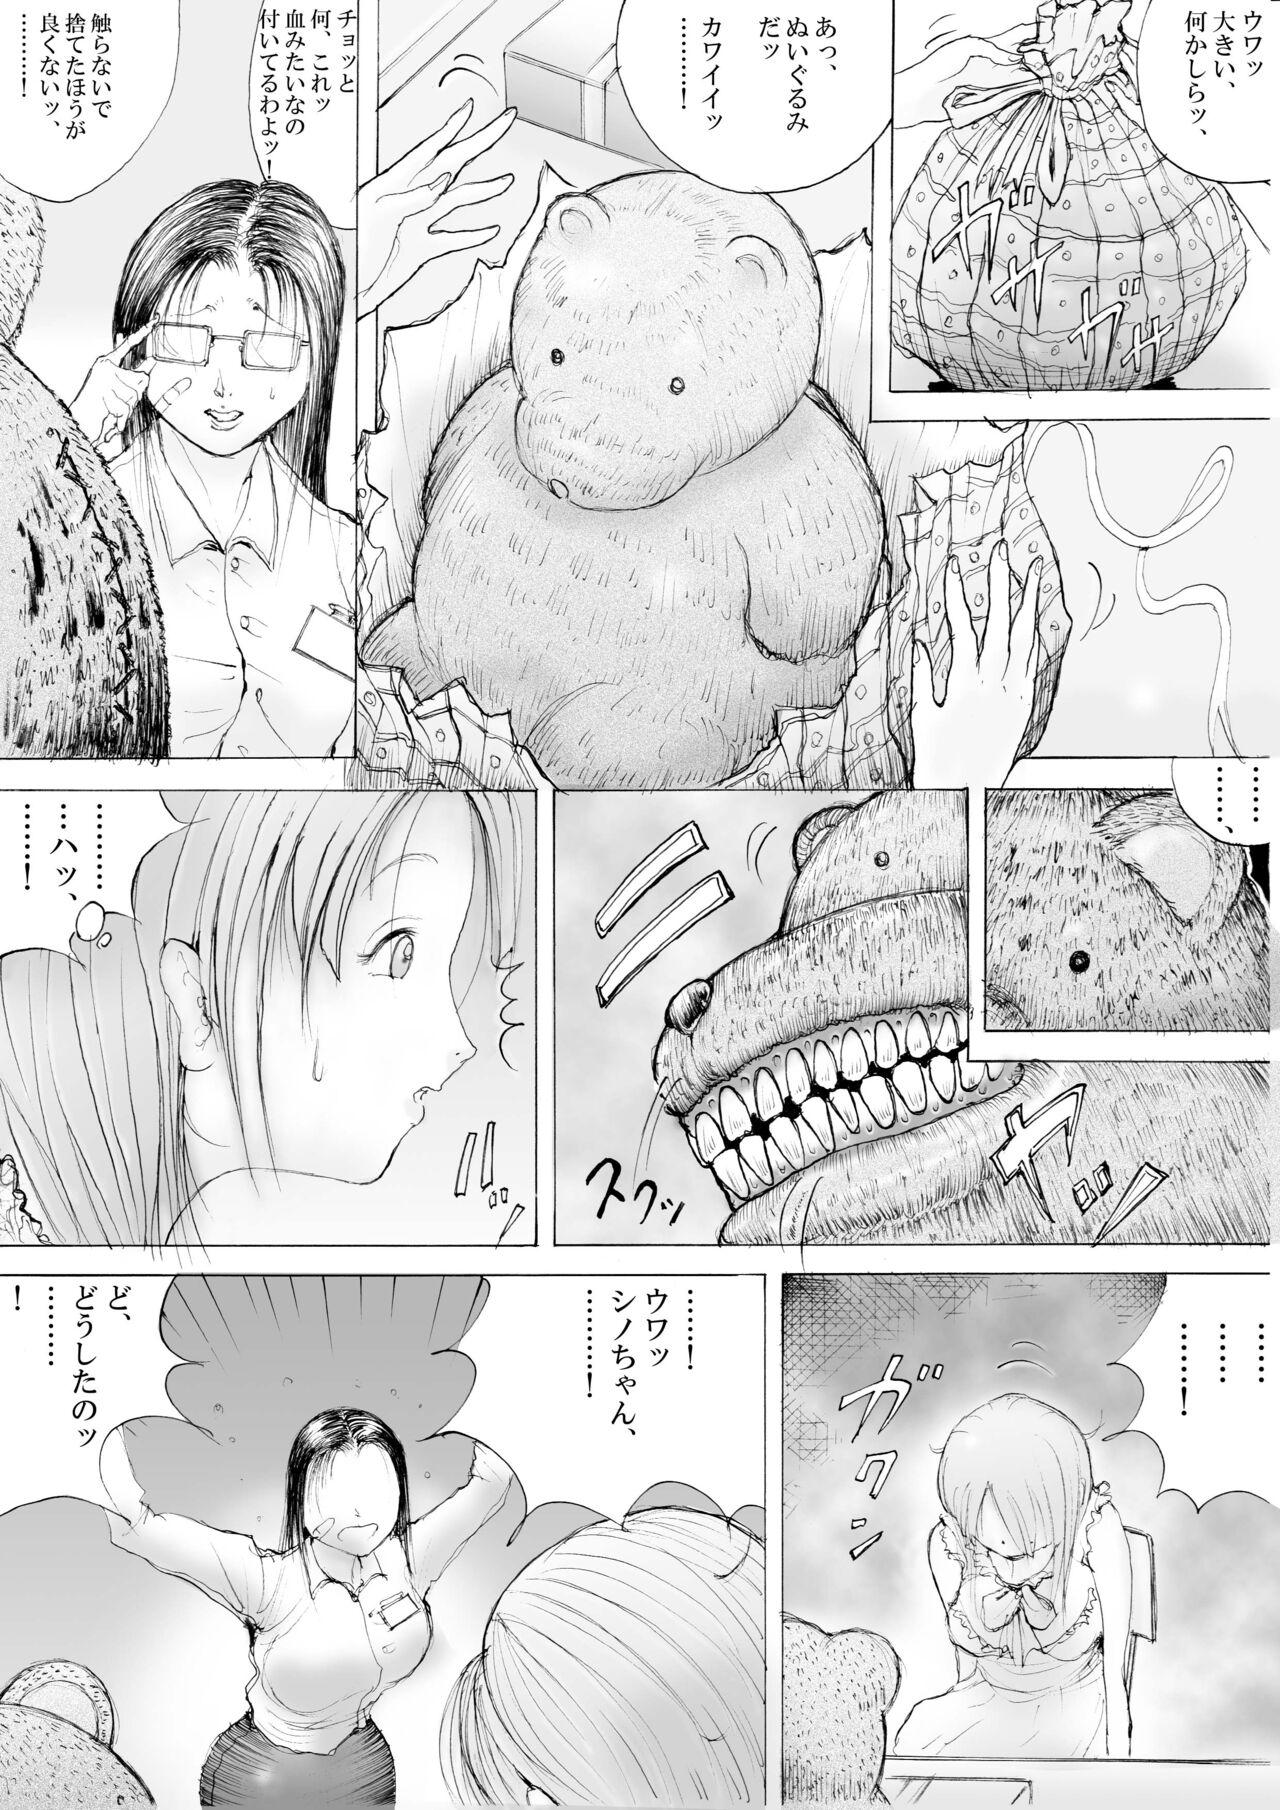 Horror Manga 10 3